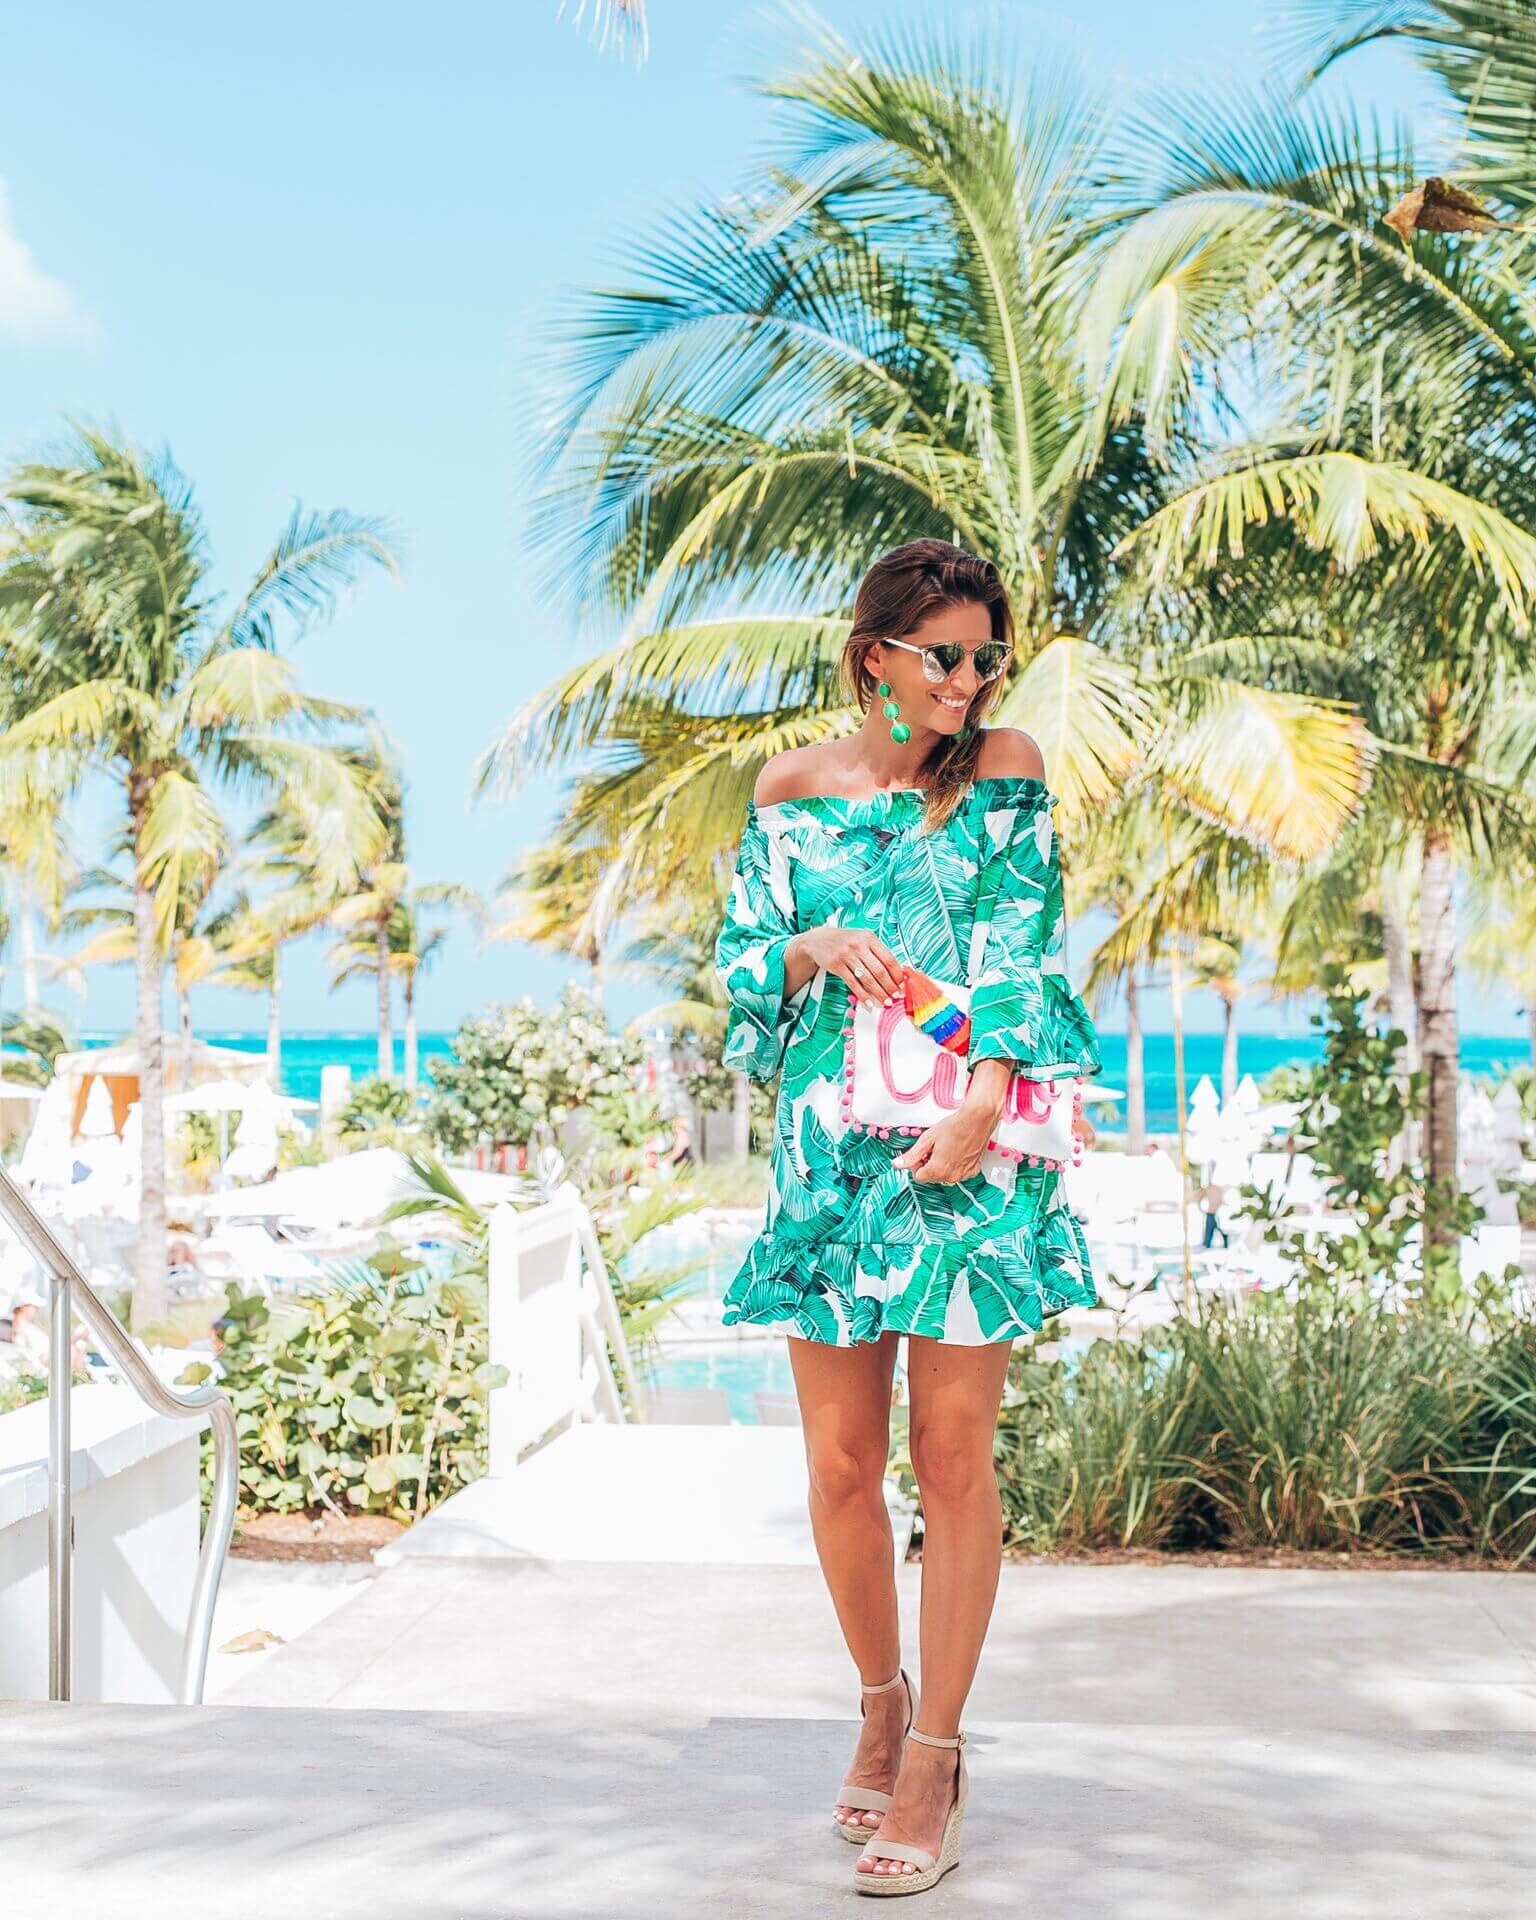 Palm print summer dress, ciao tassel and pom pom clutch, nude espadrilles, green drop earrings, dior so real sunglasses, mandy furnis sparkleshinylove, baha mar resort style